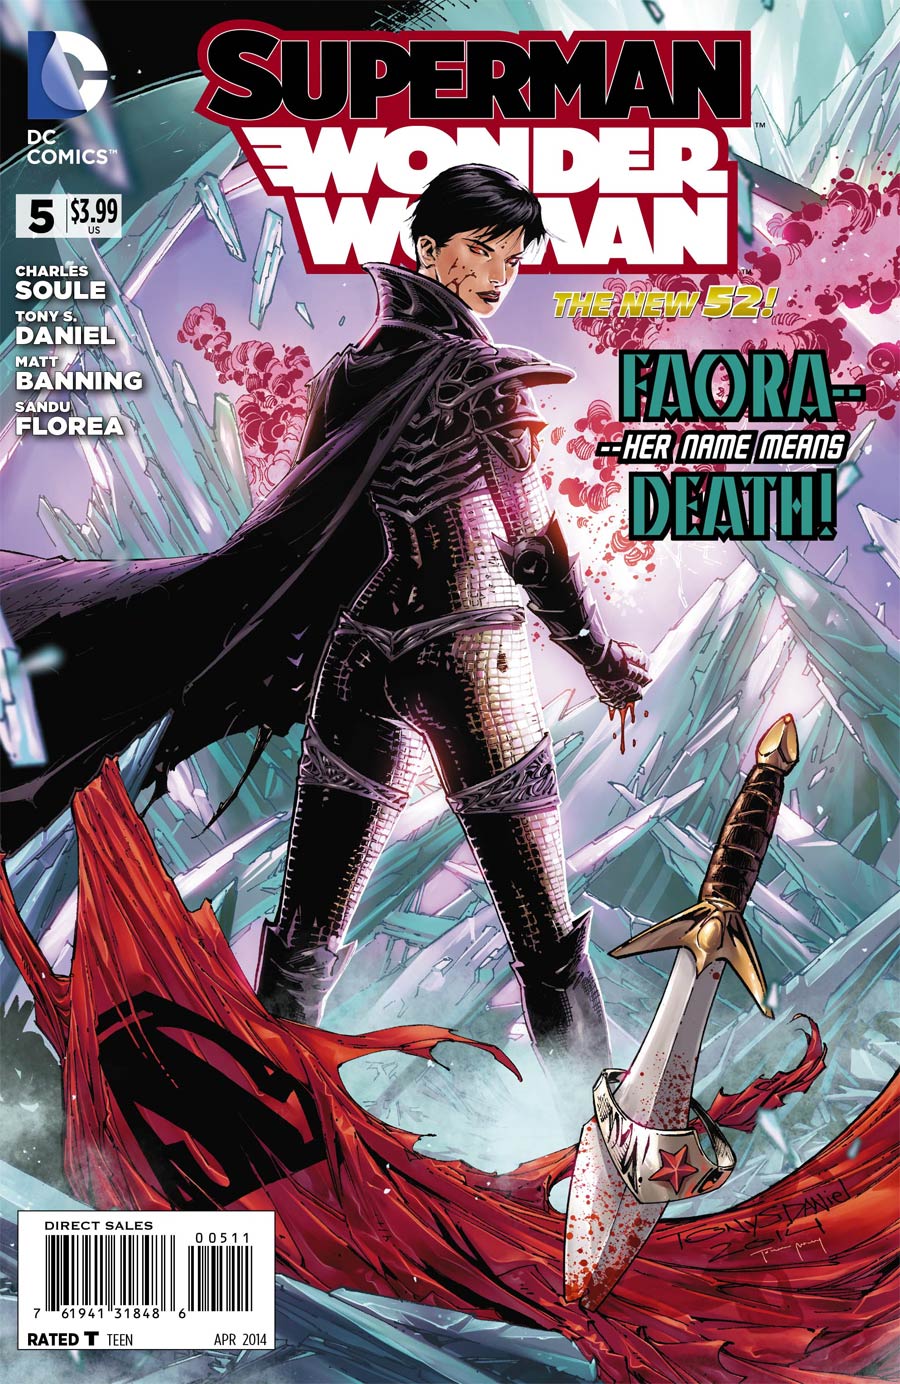 Superman Wonder Woman #5 Cover A Regular Tony S Daniel Cover